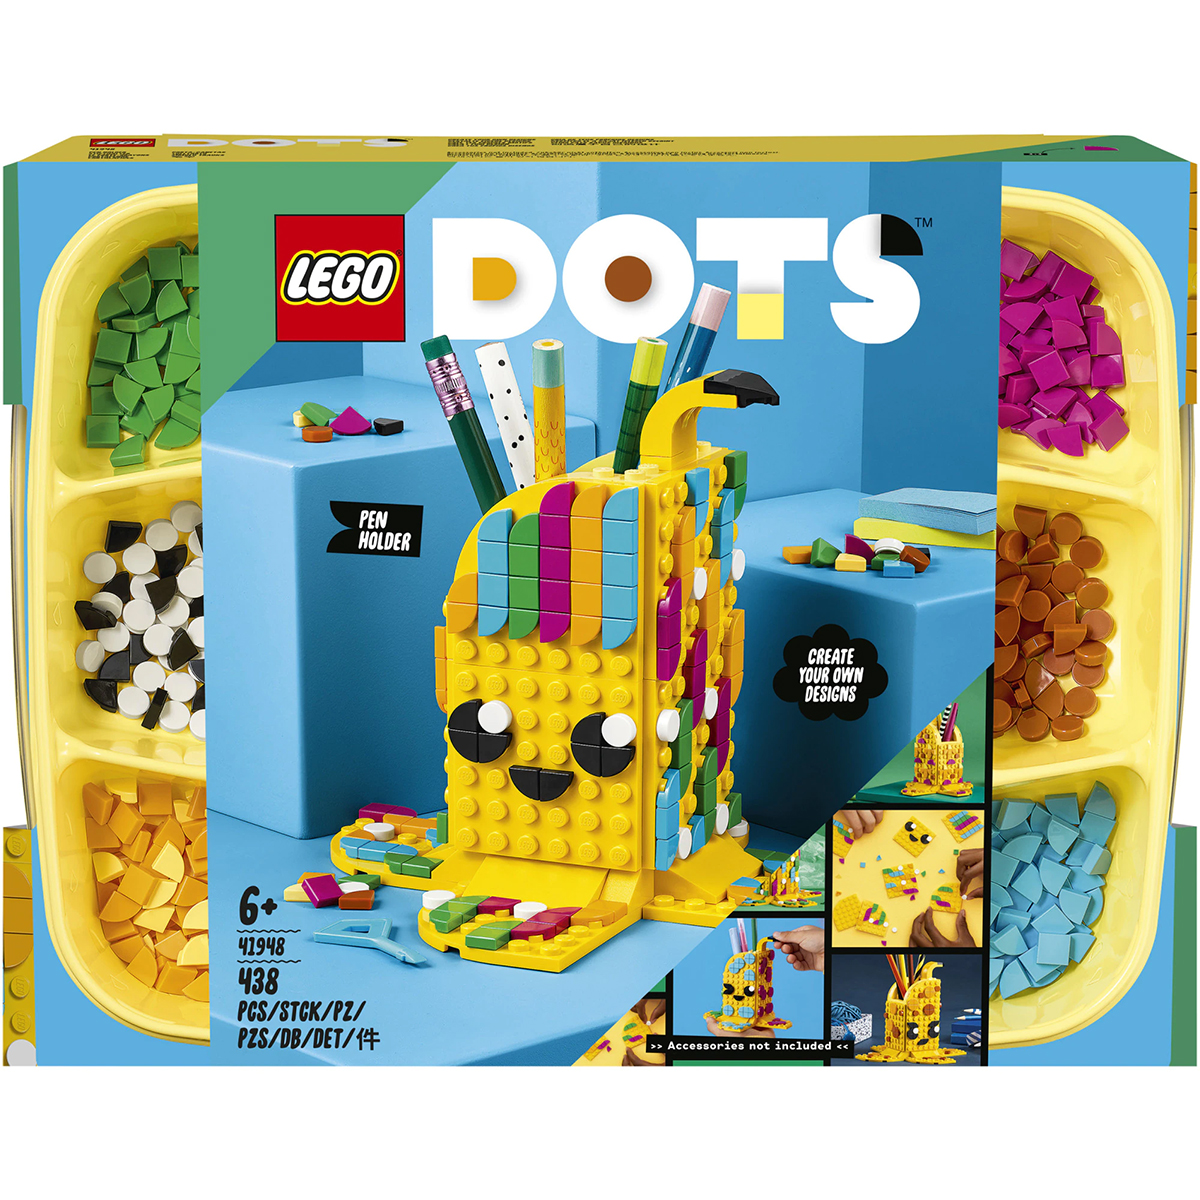 LEGO® DOTS™: Suport creioane - Banana adorabila, 438 piese, 41948, Multicolor